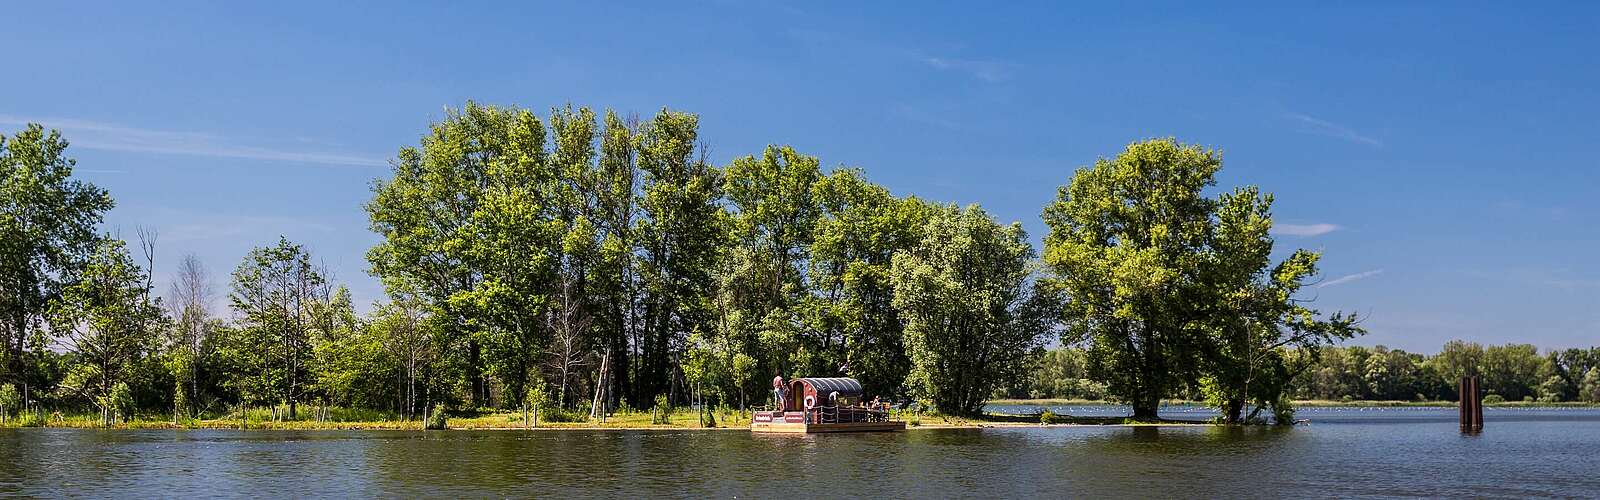 Floß auf der Havel,
        
    

        Foto: TMB-Fotoarchiv/Yorck Maecke